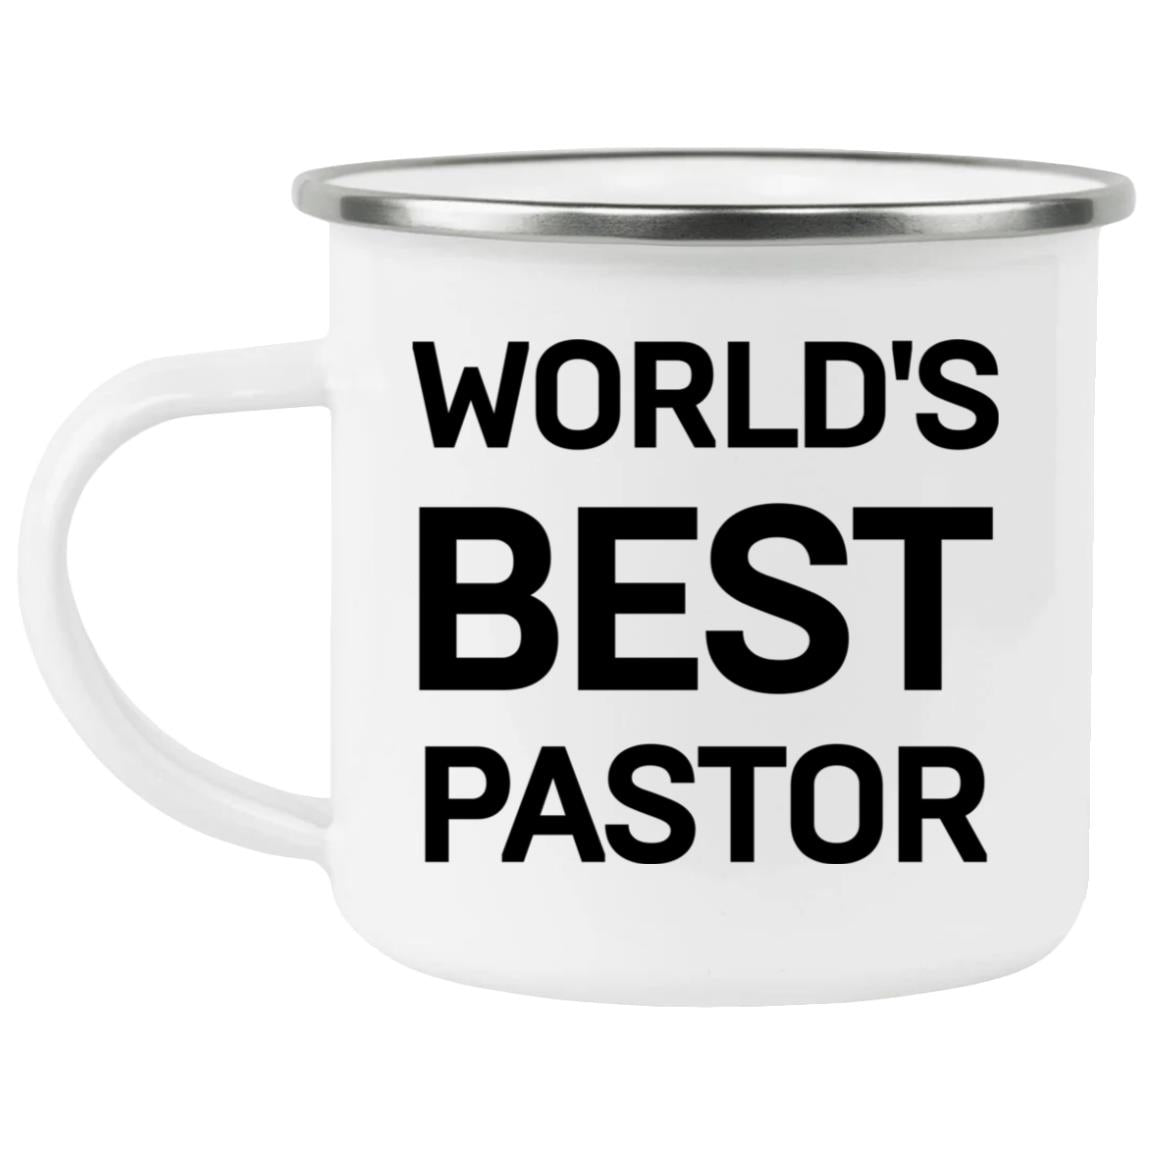 Worlds Best Pastor (12oz Enamel Camping Mug)